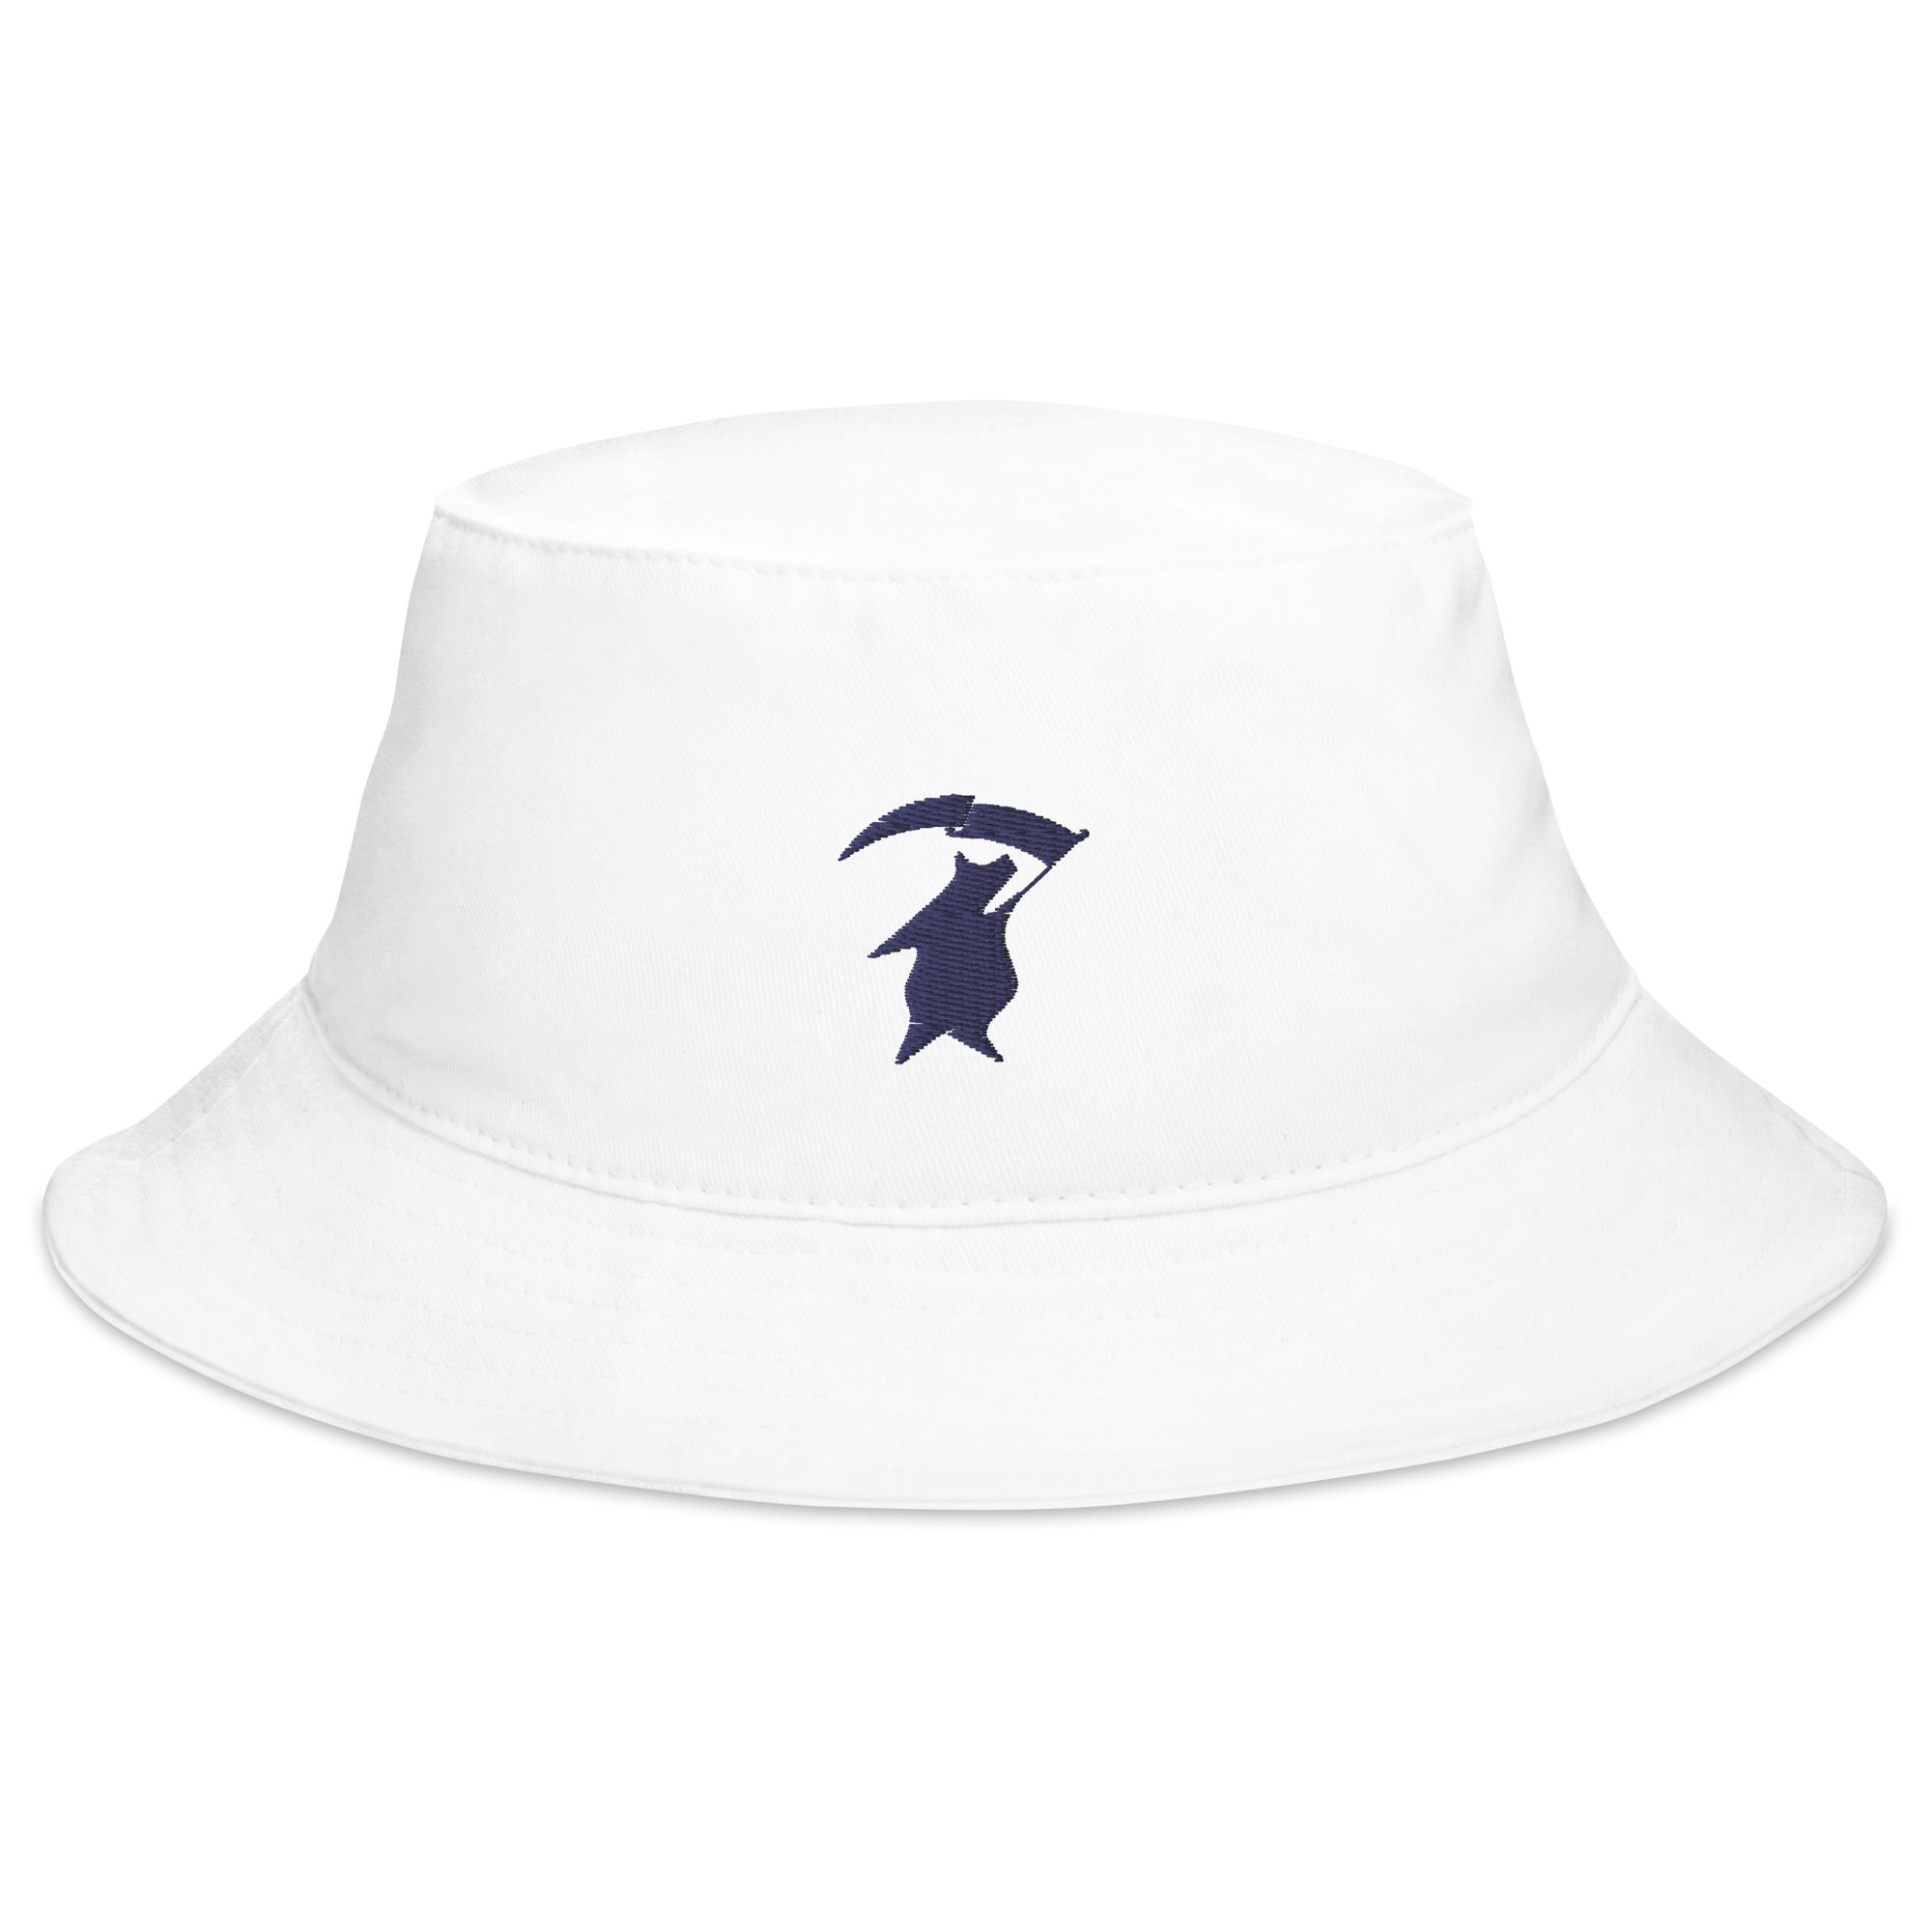 C.F. Porkfester's "Classic Logo" Bucket Hat